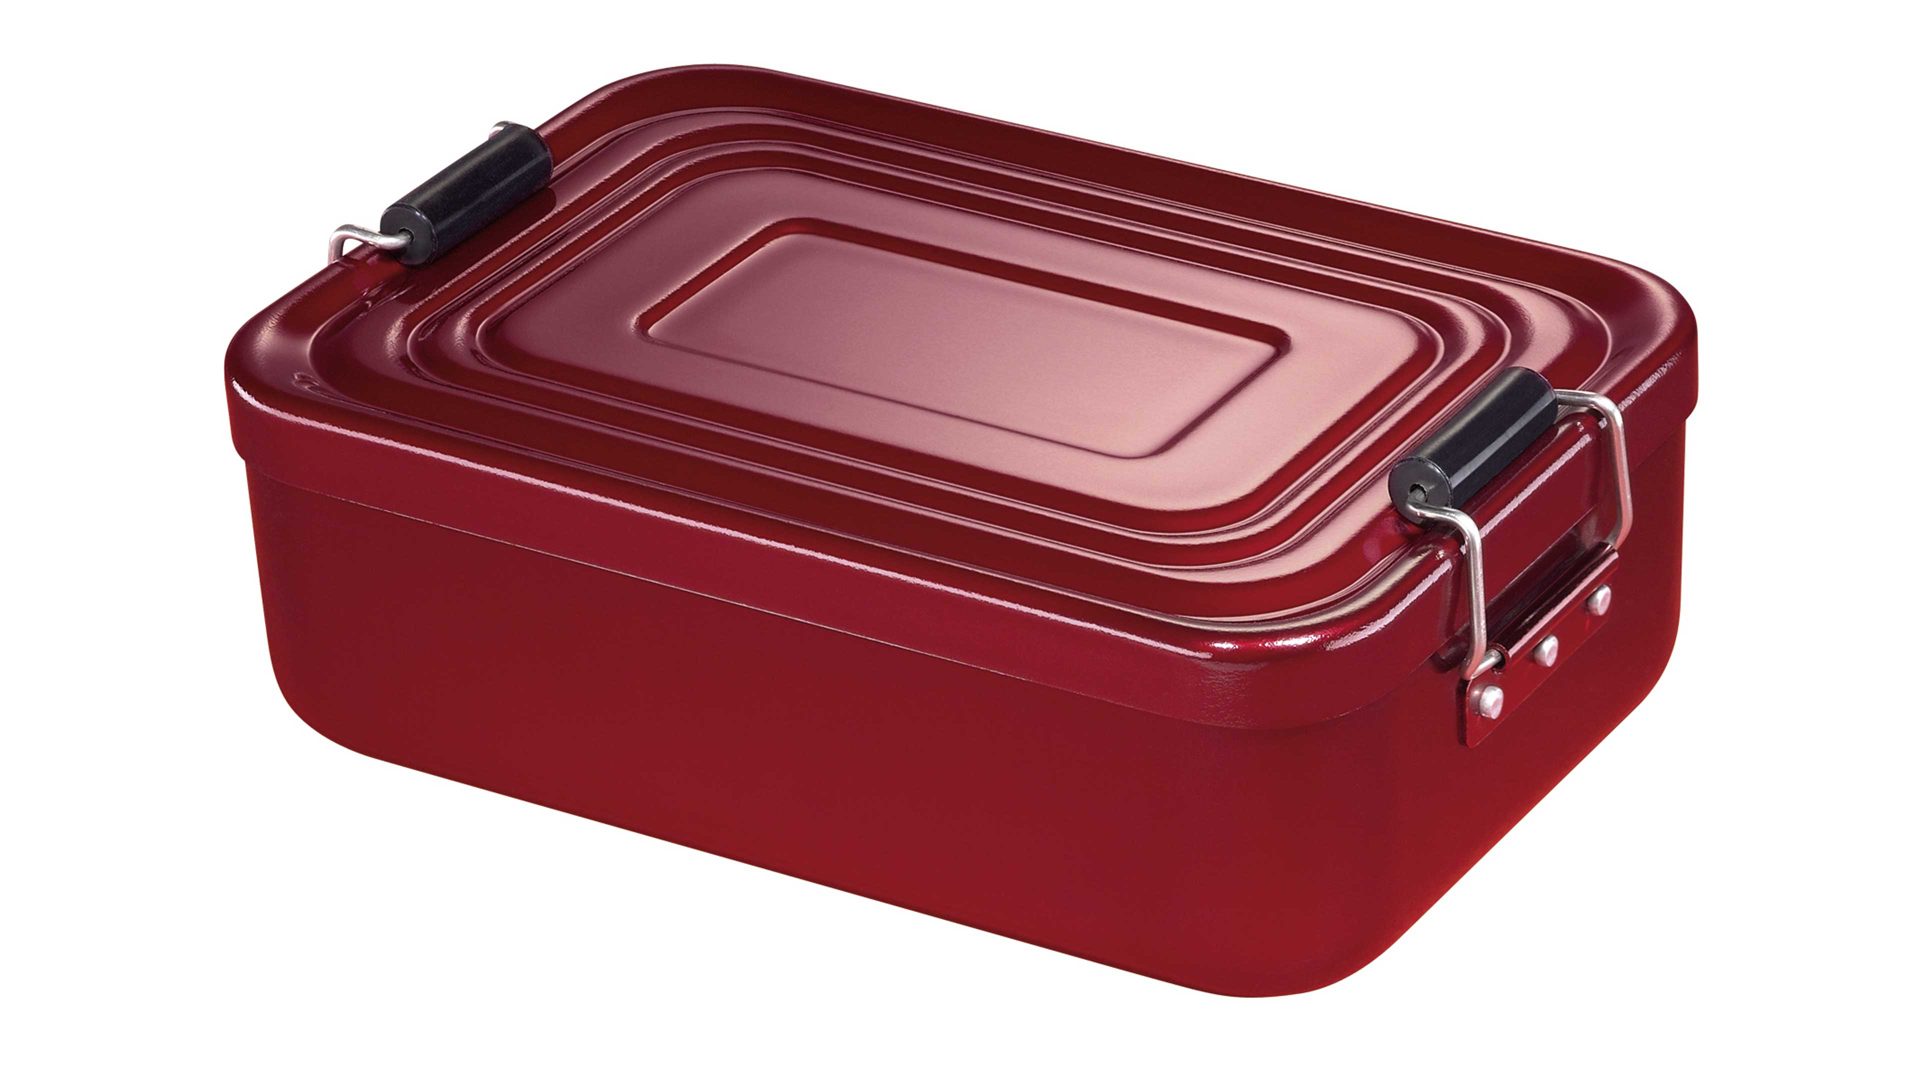 Dose Küchenprofi aus Metall in Dunkelrot KÜCHENPROFI Lunch Box rotes Aluminium – ca. 23 x 15 cm